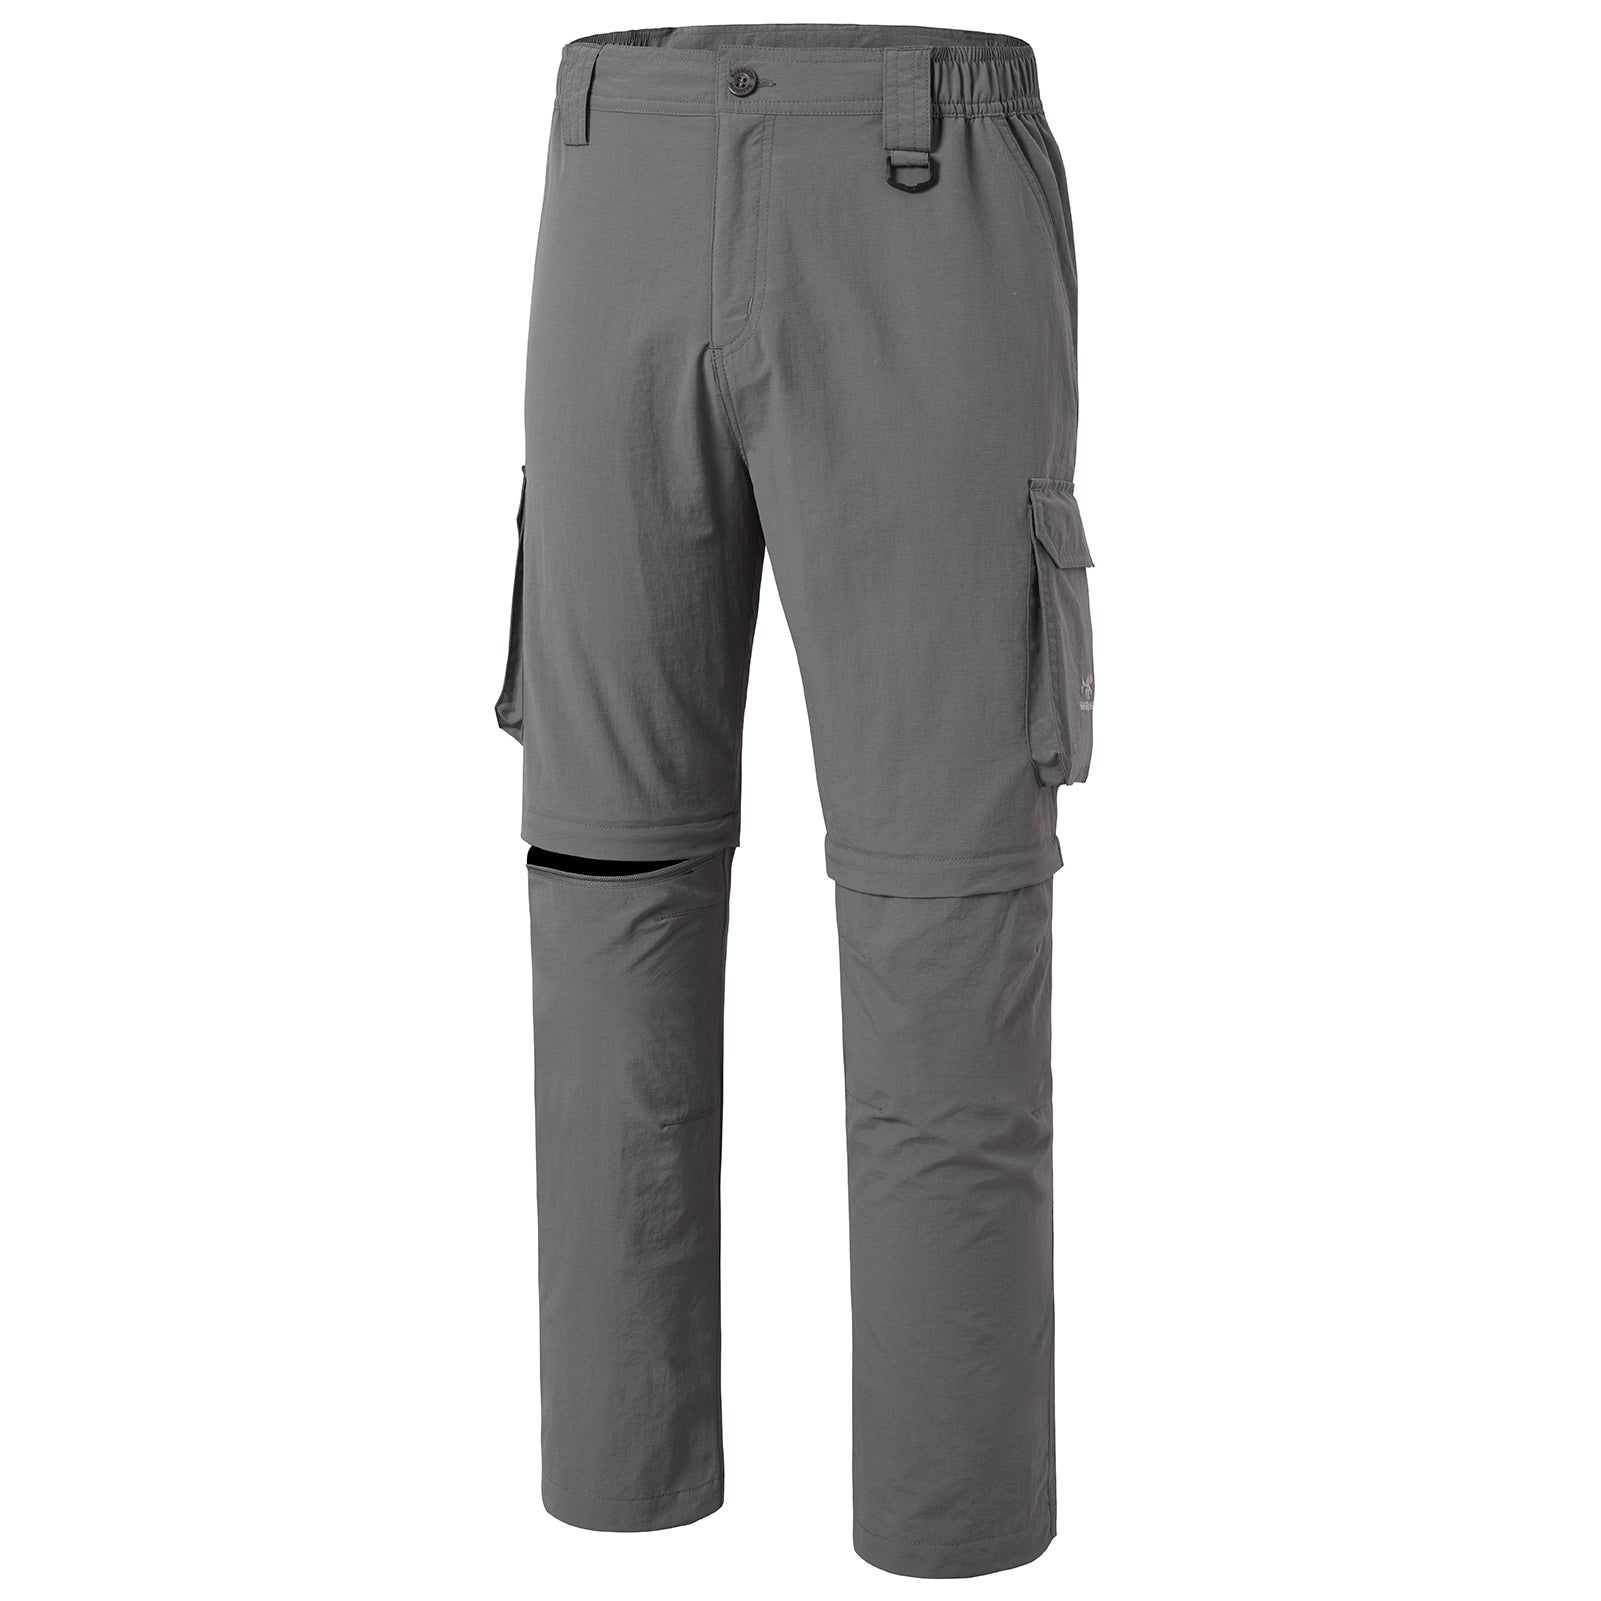 Bassdash Men's Fishing Pants with Zip Off Legs Pond Green / 32W×32L